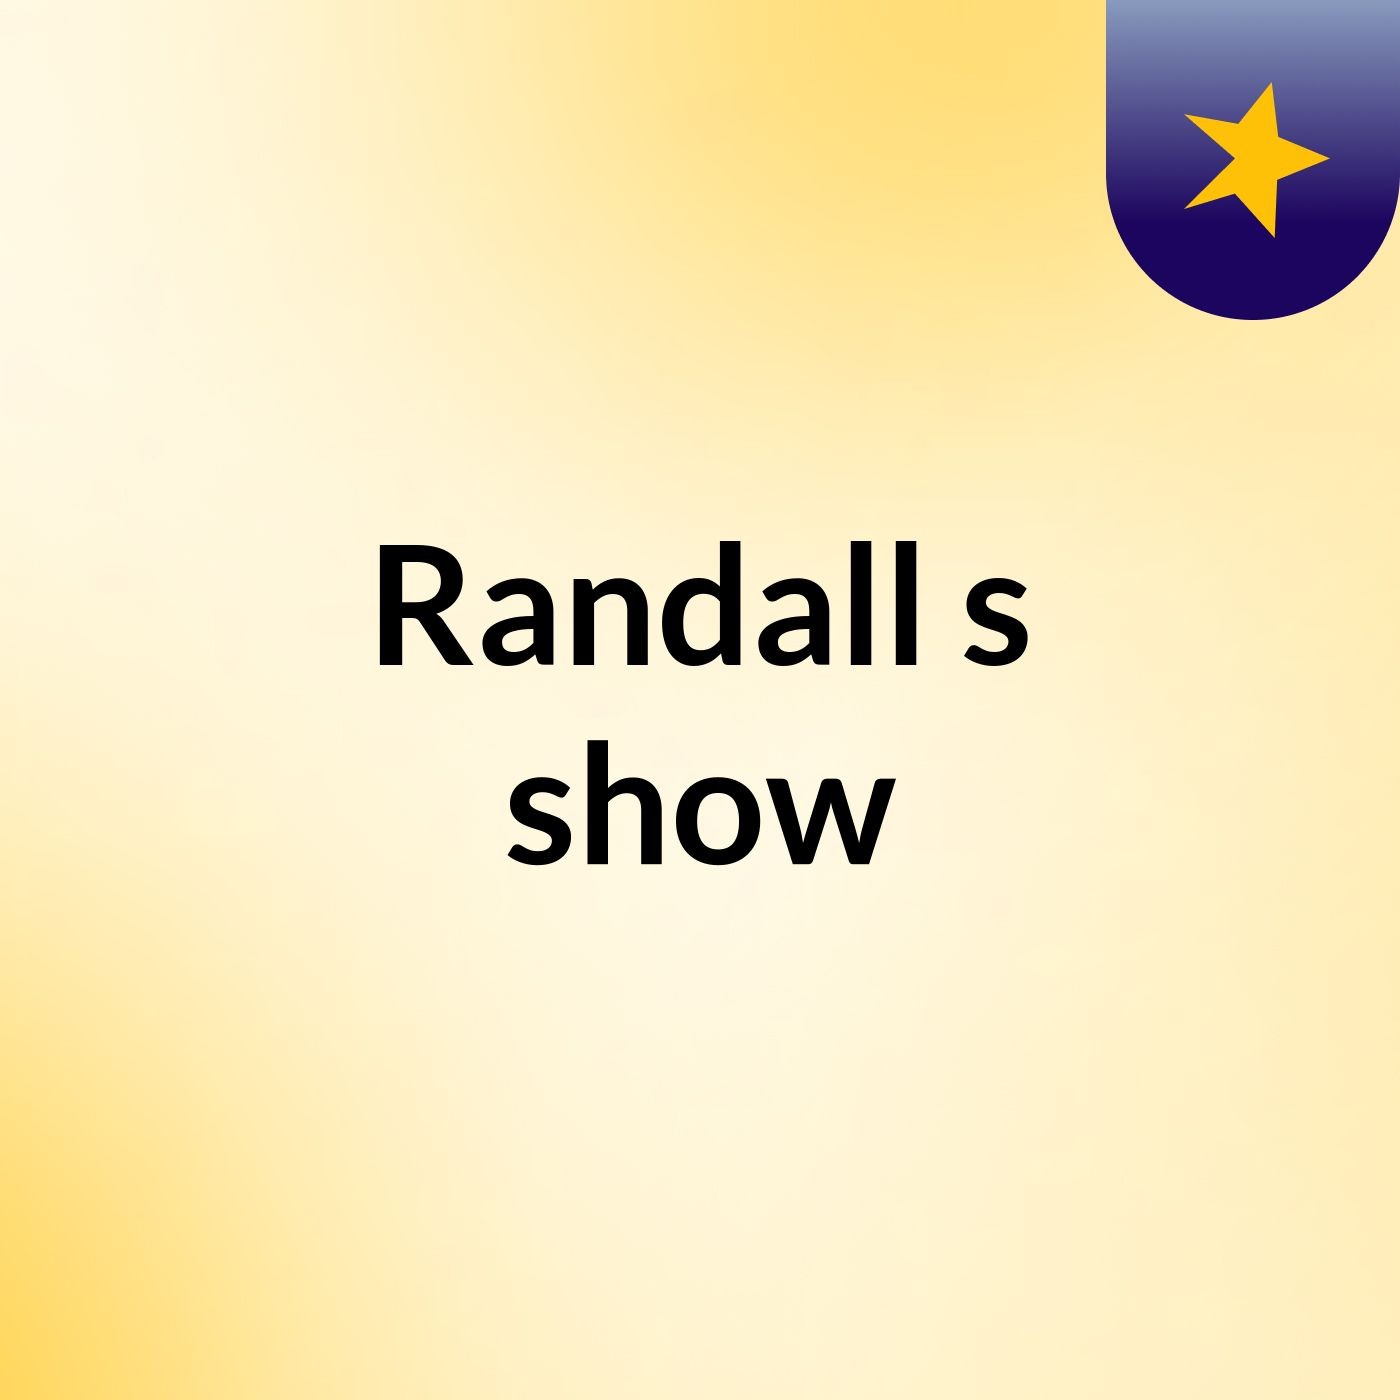 Randall's show